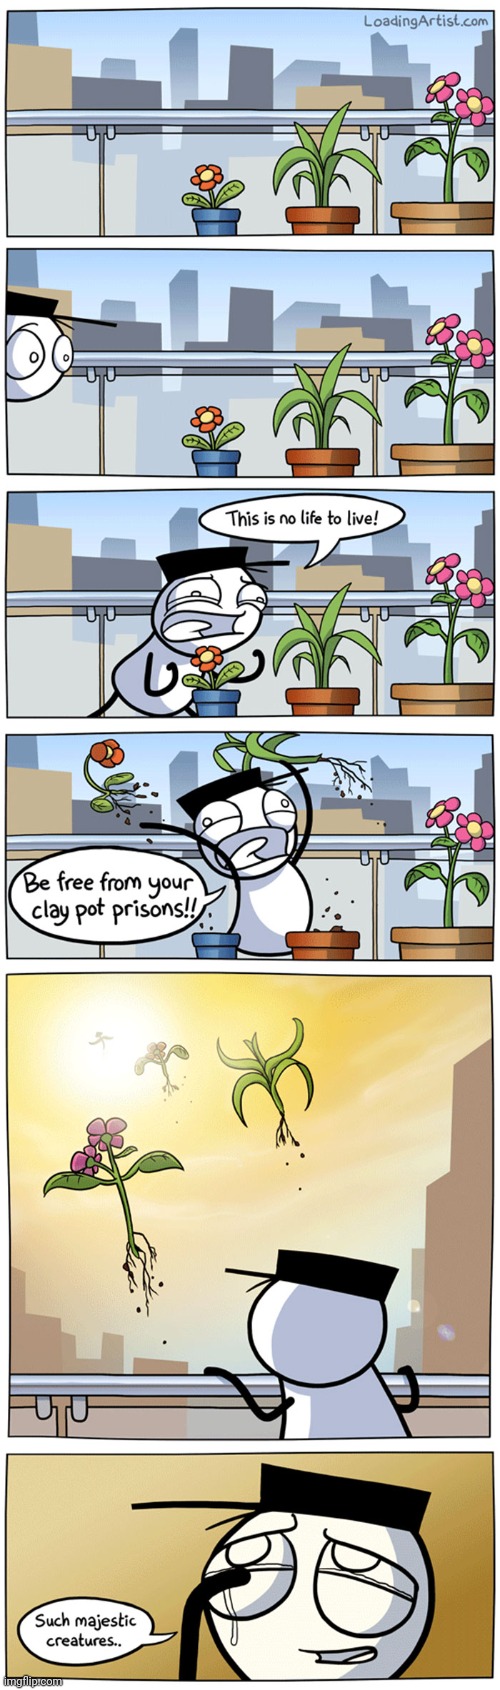 Plants | image tagged in plants,plant,flowers,flower,comics,comics/cartoons | made w/ Imgflip meme maker